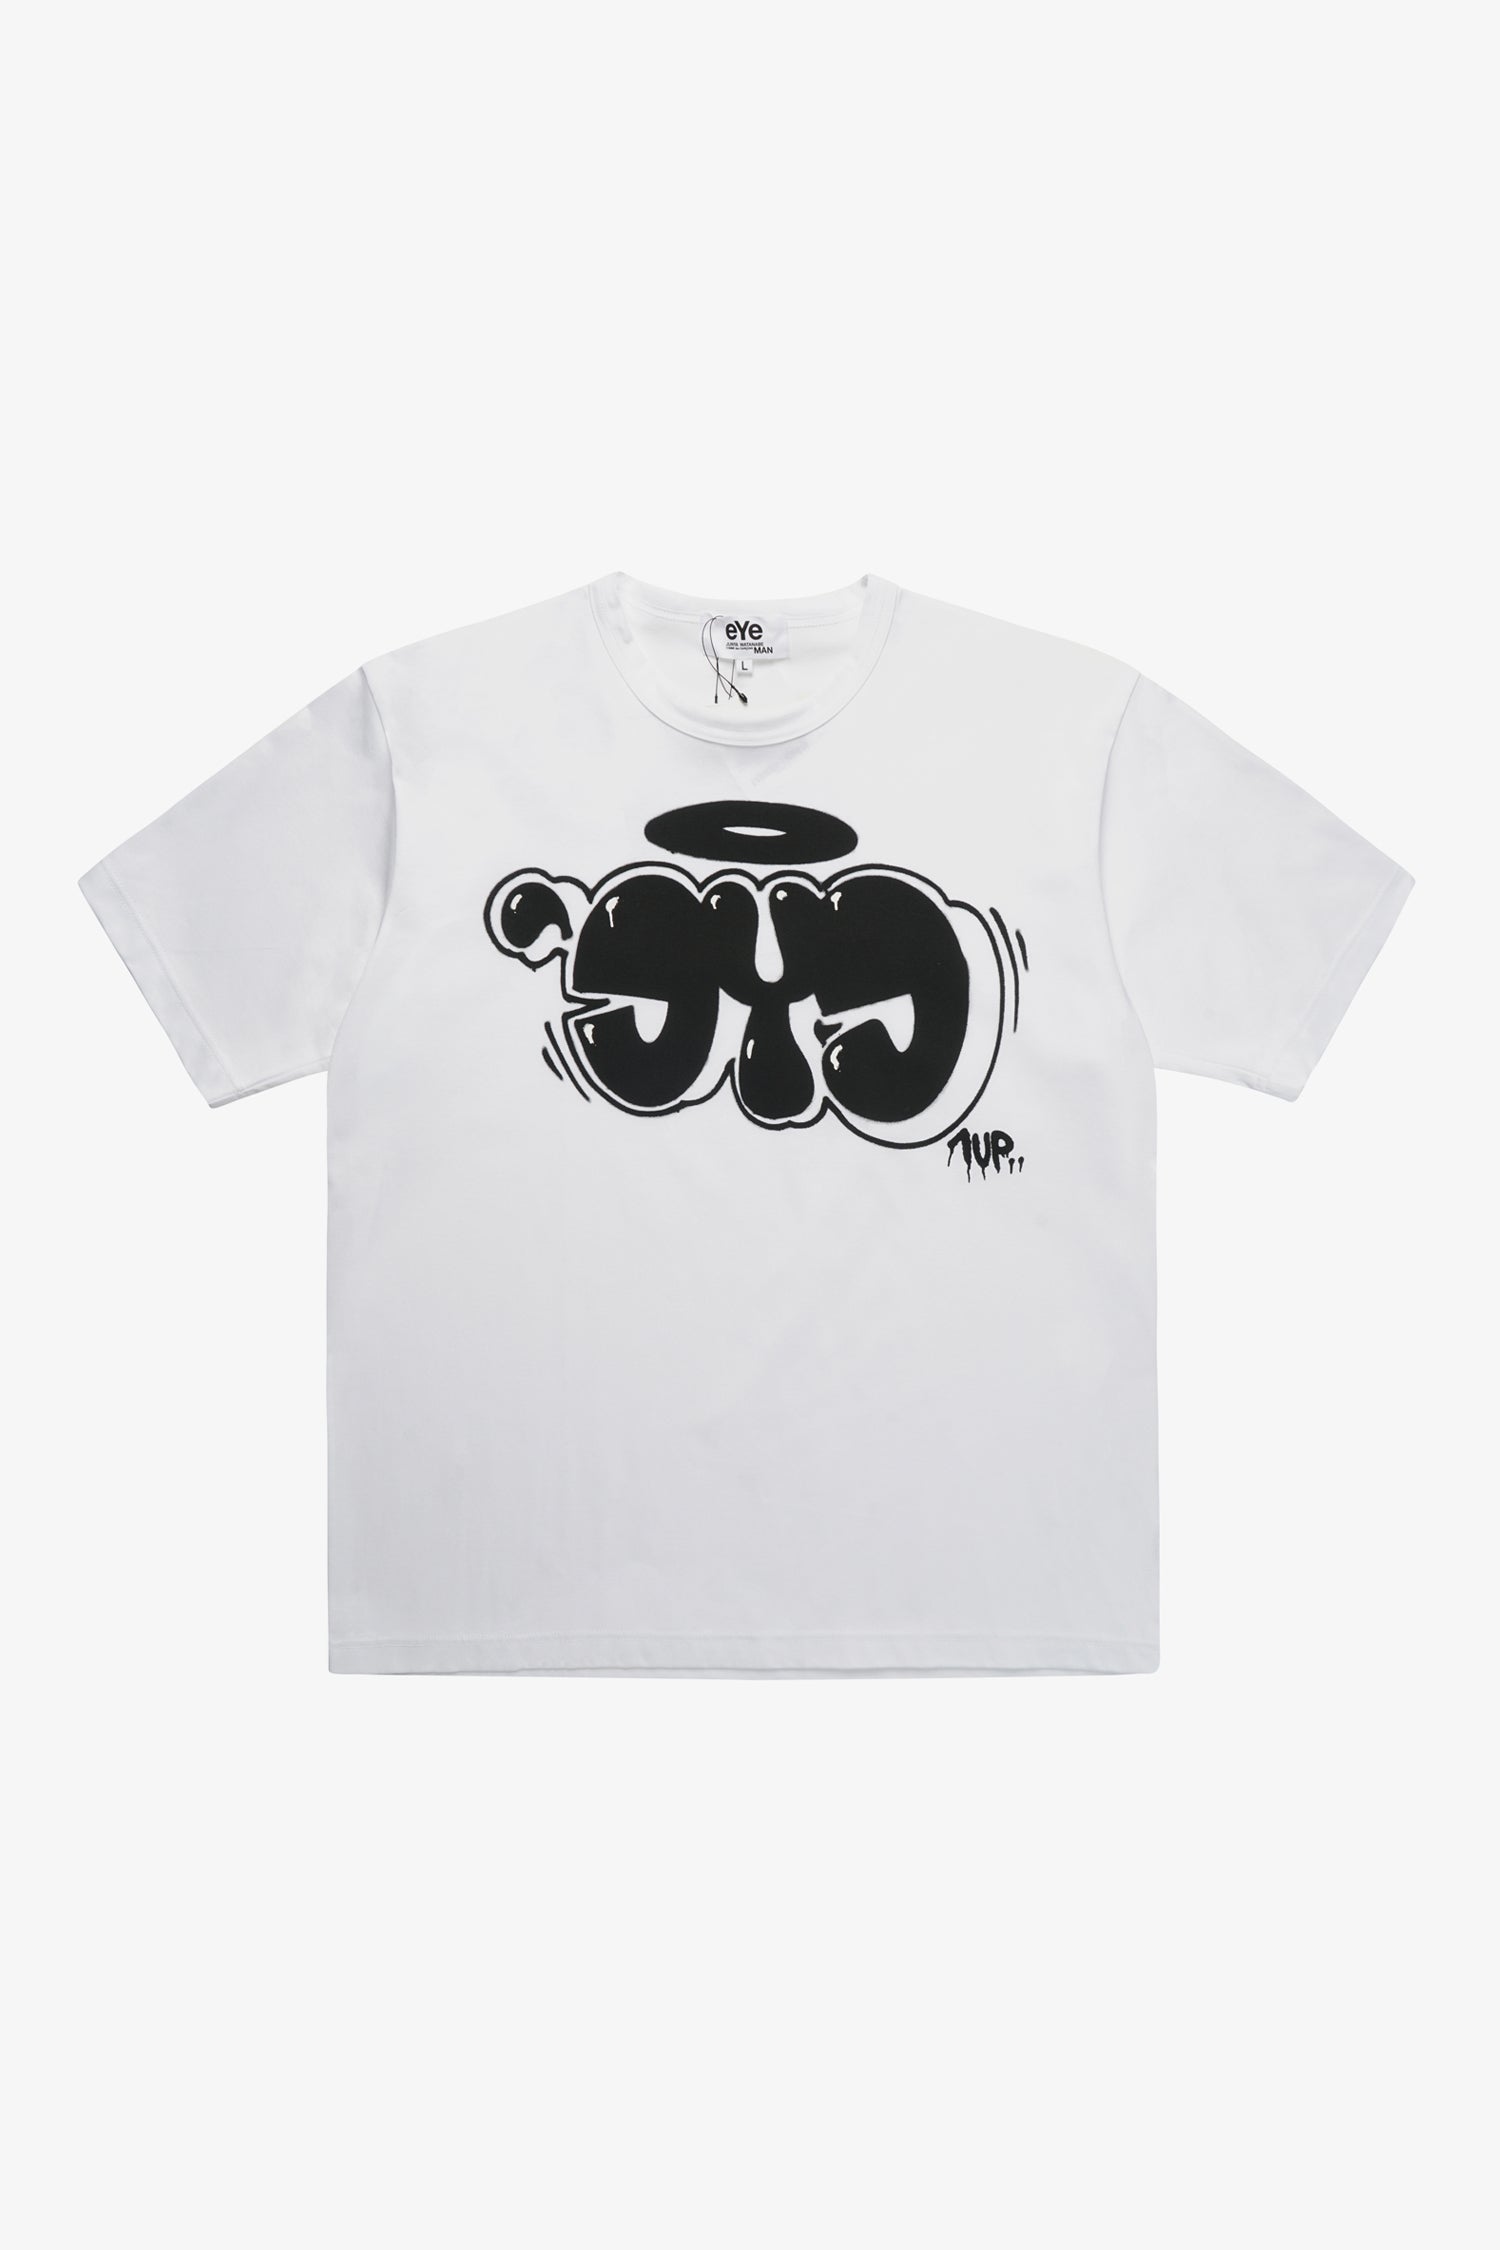 Selectshop FRAME - JUNYA WATANABE MAN EYE "1UP" T-Shirt T-Shirts Dubai